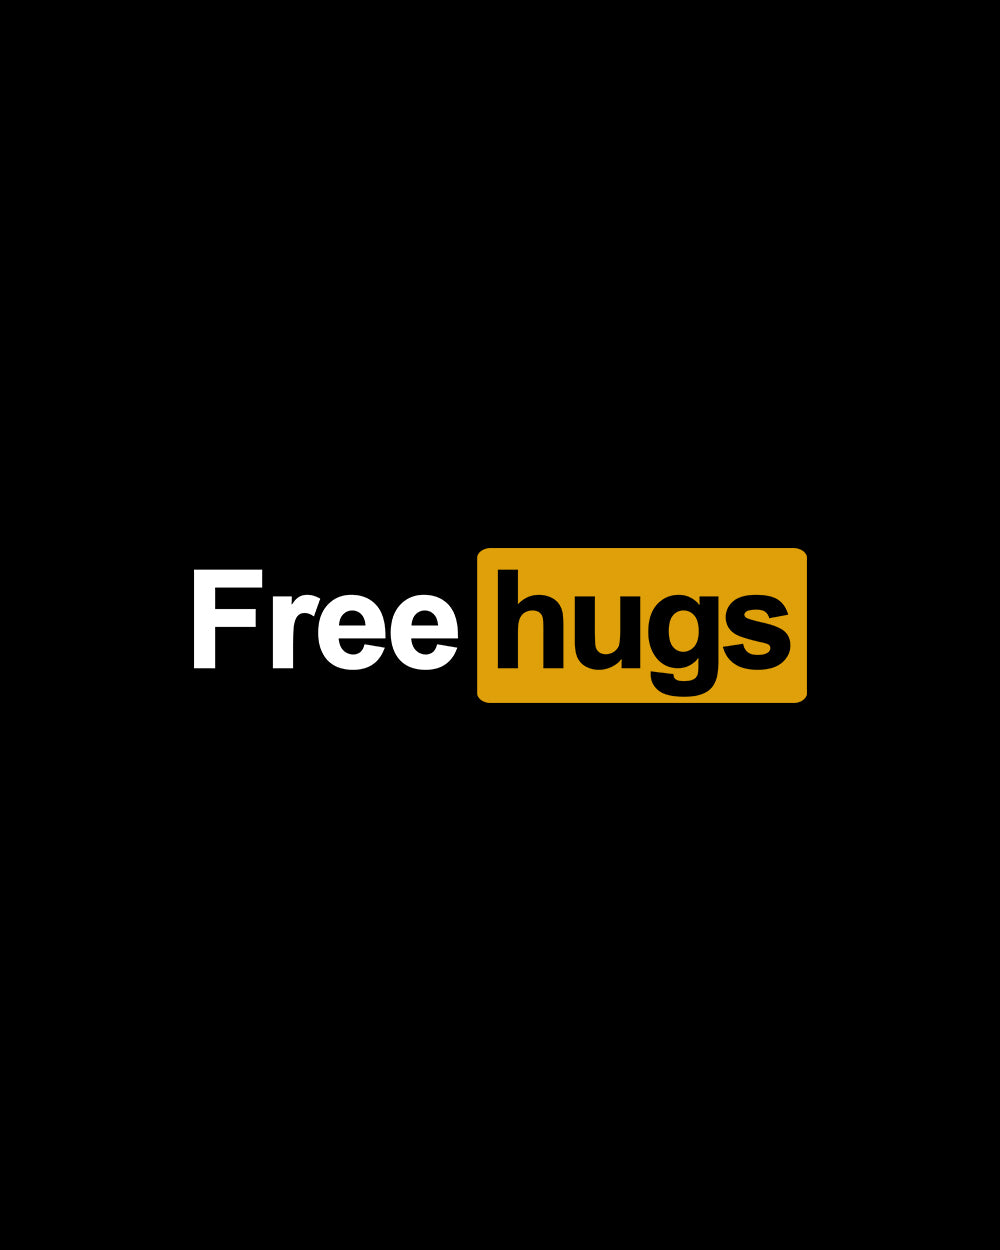 Free Hugs Sweater Australia Online #colour_black